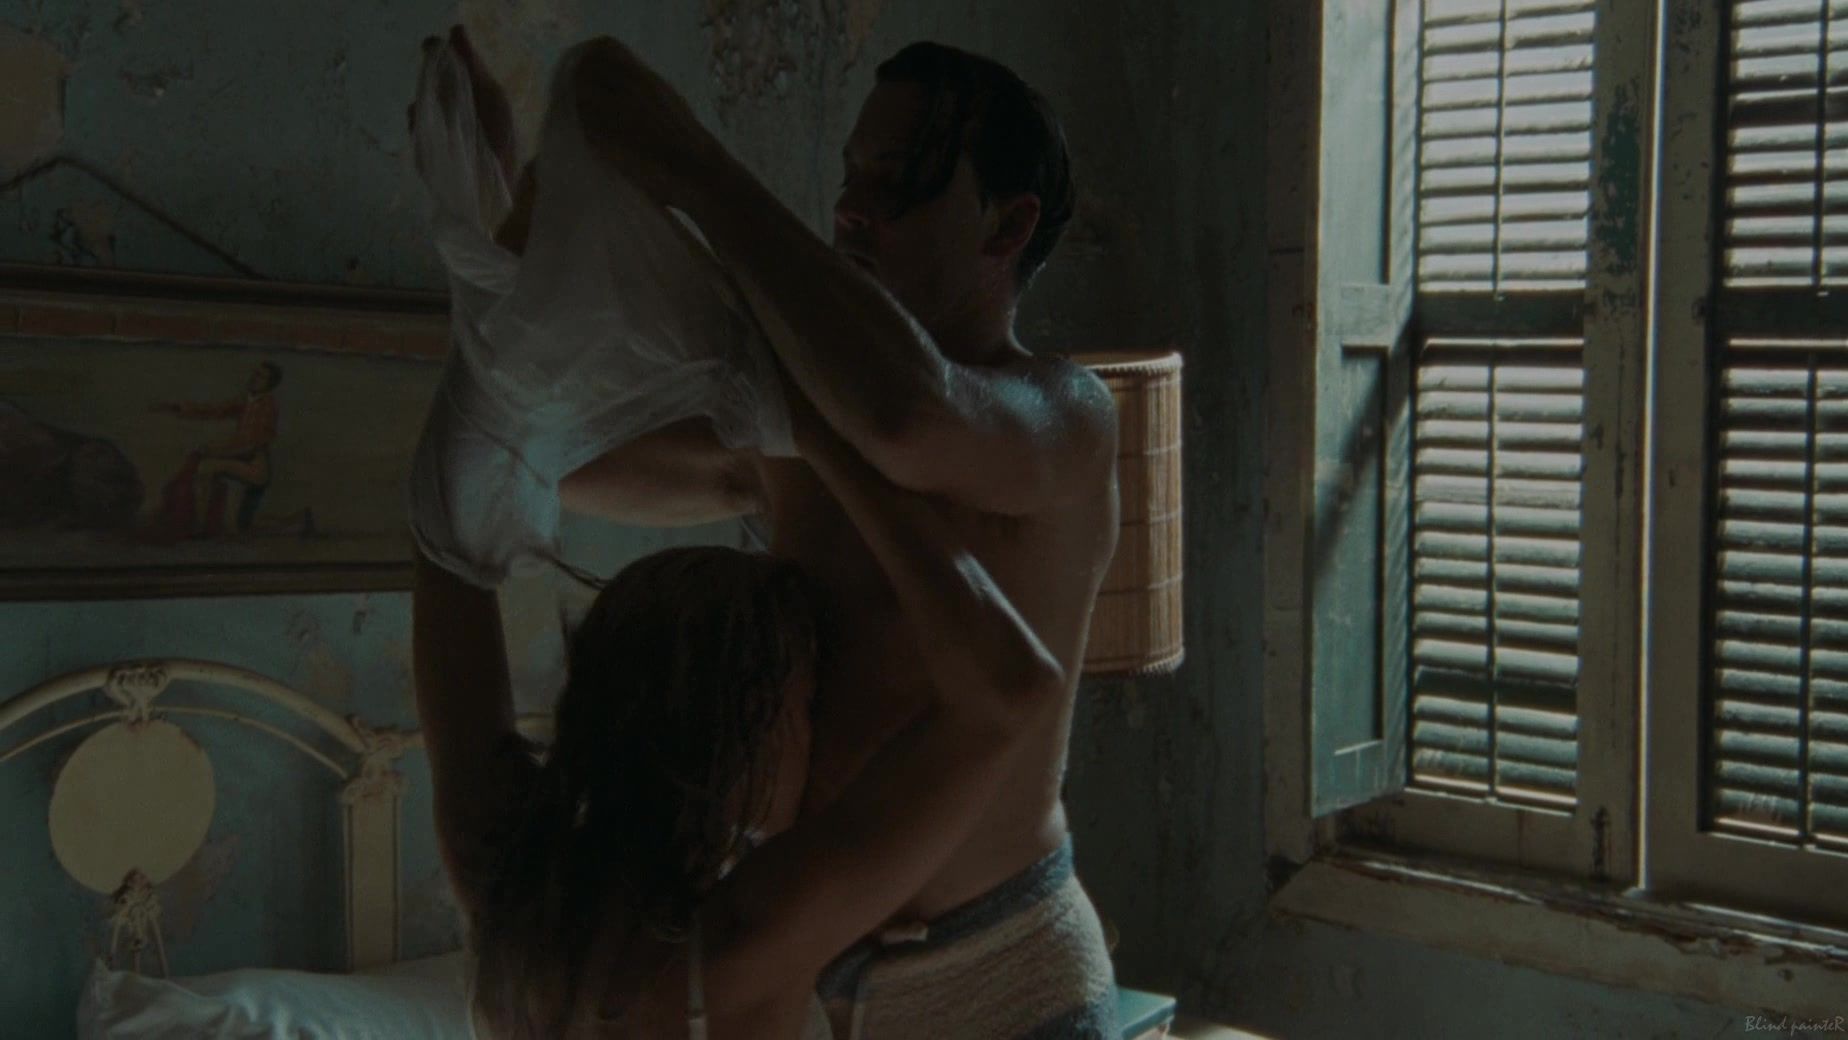 Maid Sex video Amber Heard nude - The Rum Diary (2011) GigPorno